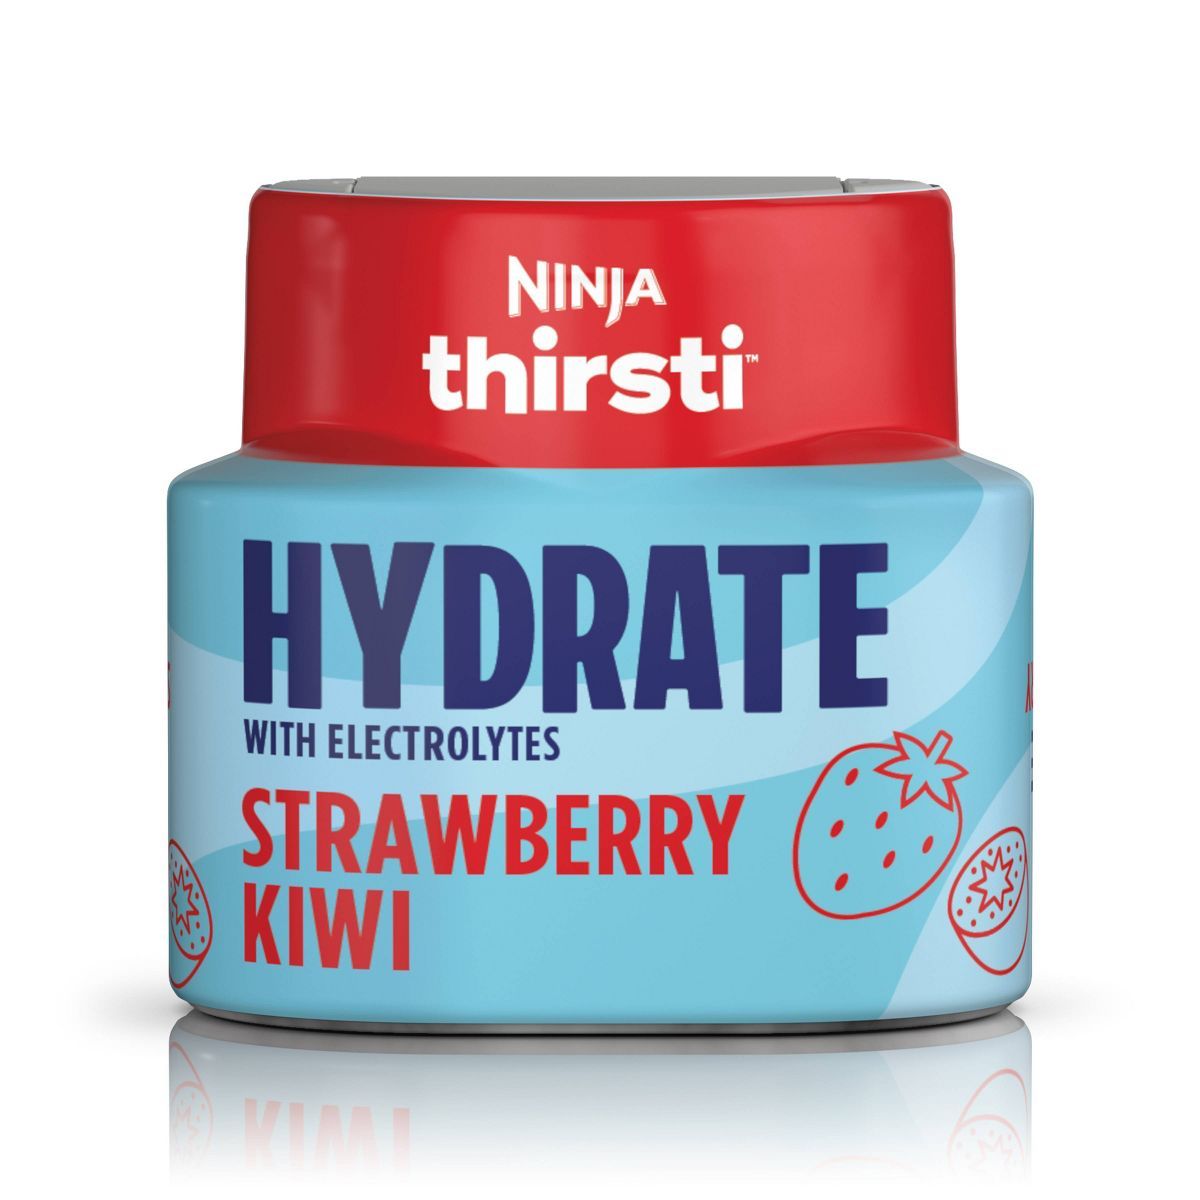 Ninja Thirsti HYDRATE Strawberry Kiwi Flavored Water Drops | Target